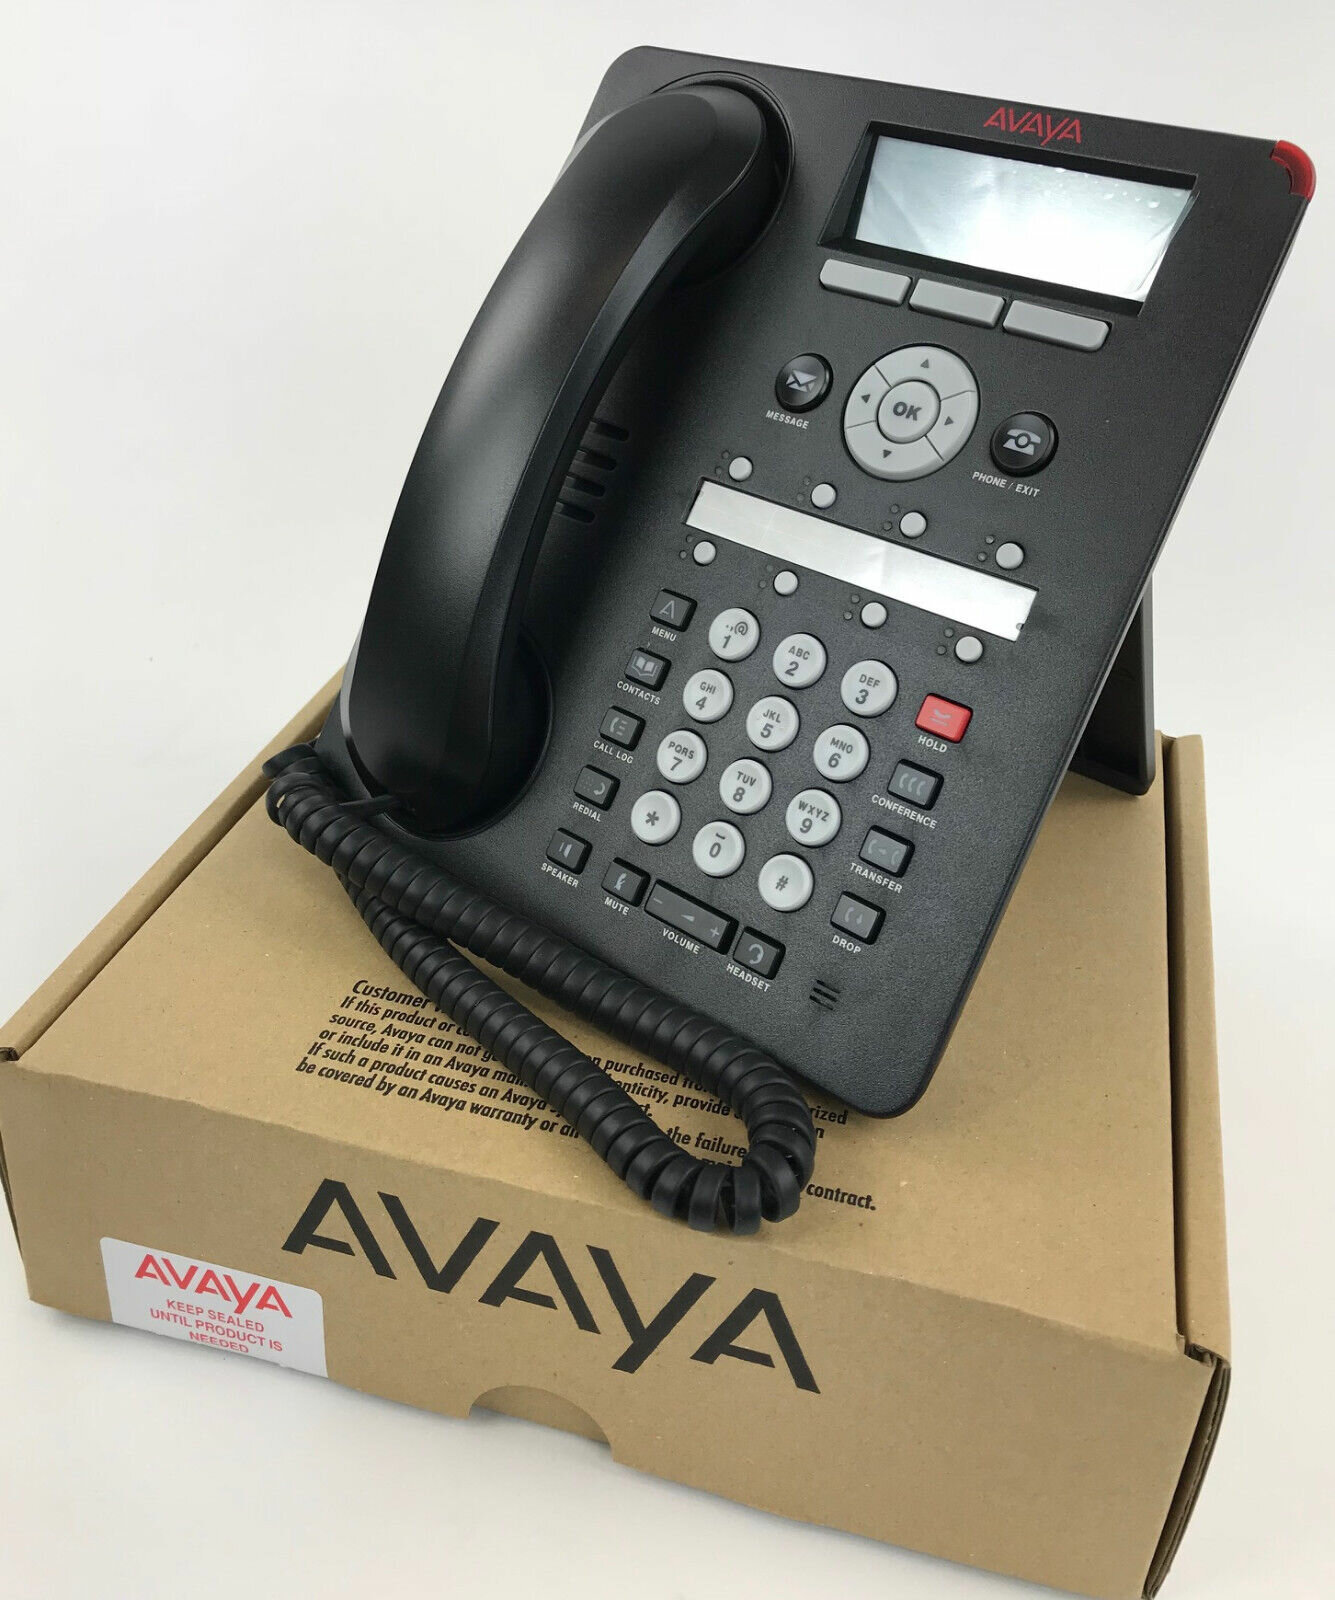 VoIP-телефон Avaya 1608